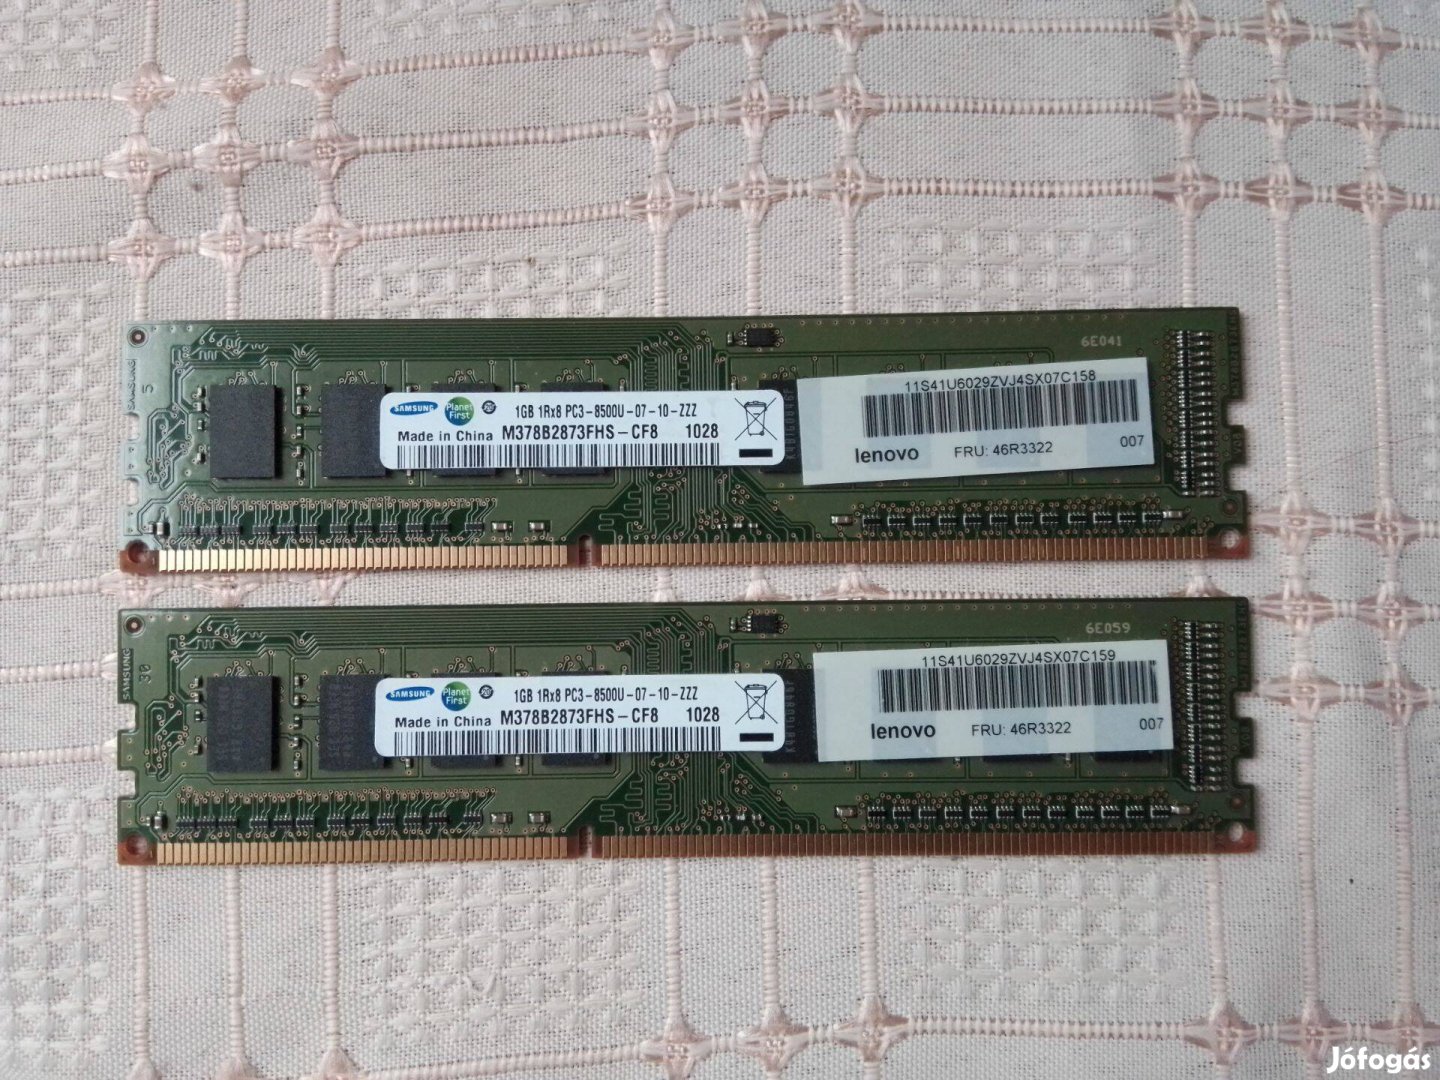 Eladó Samsung PC3 1GB Memória RAM